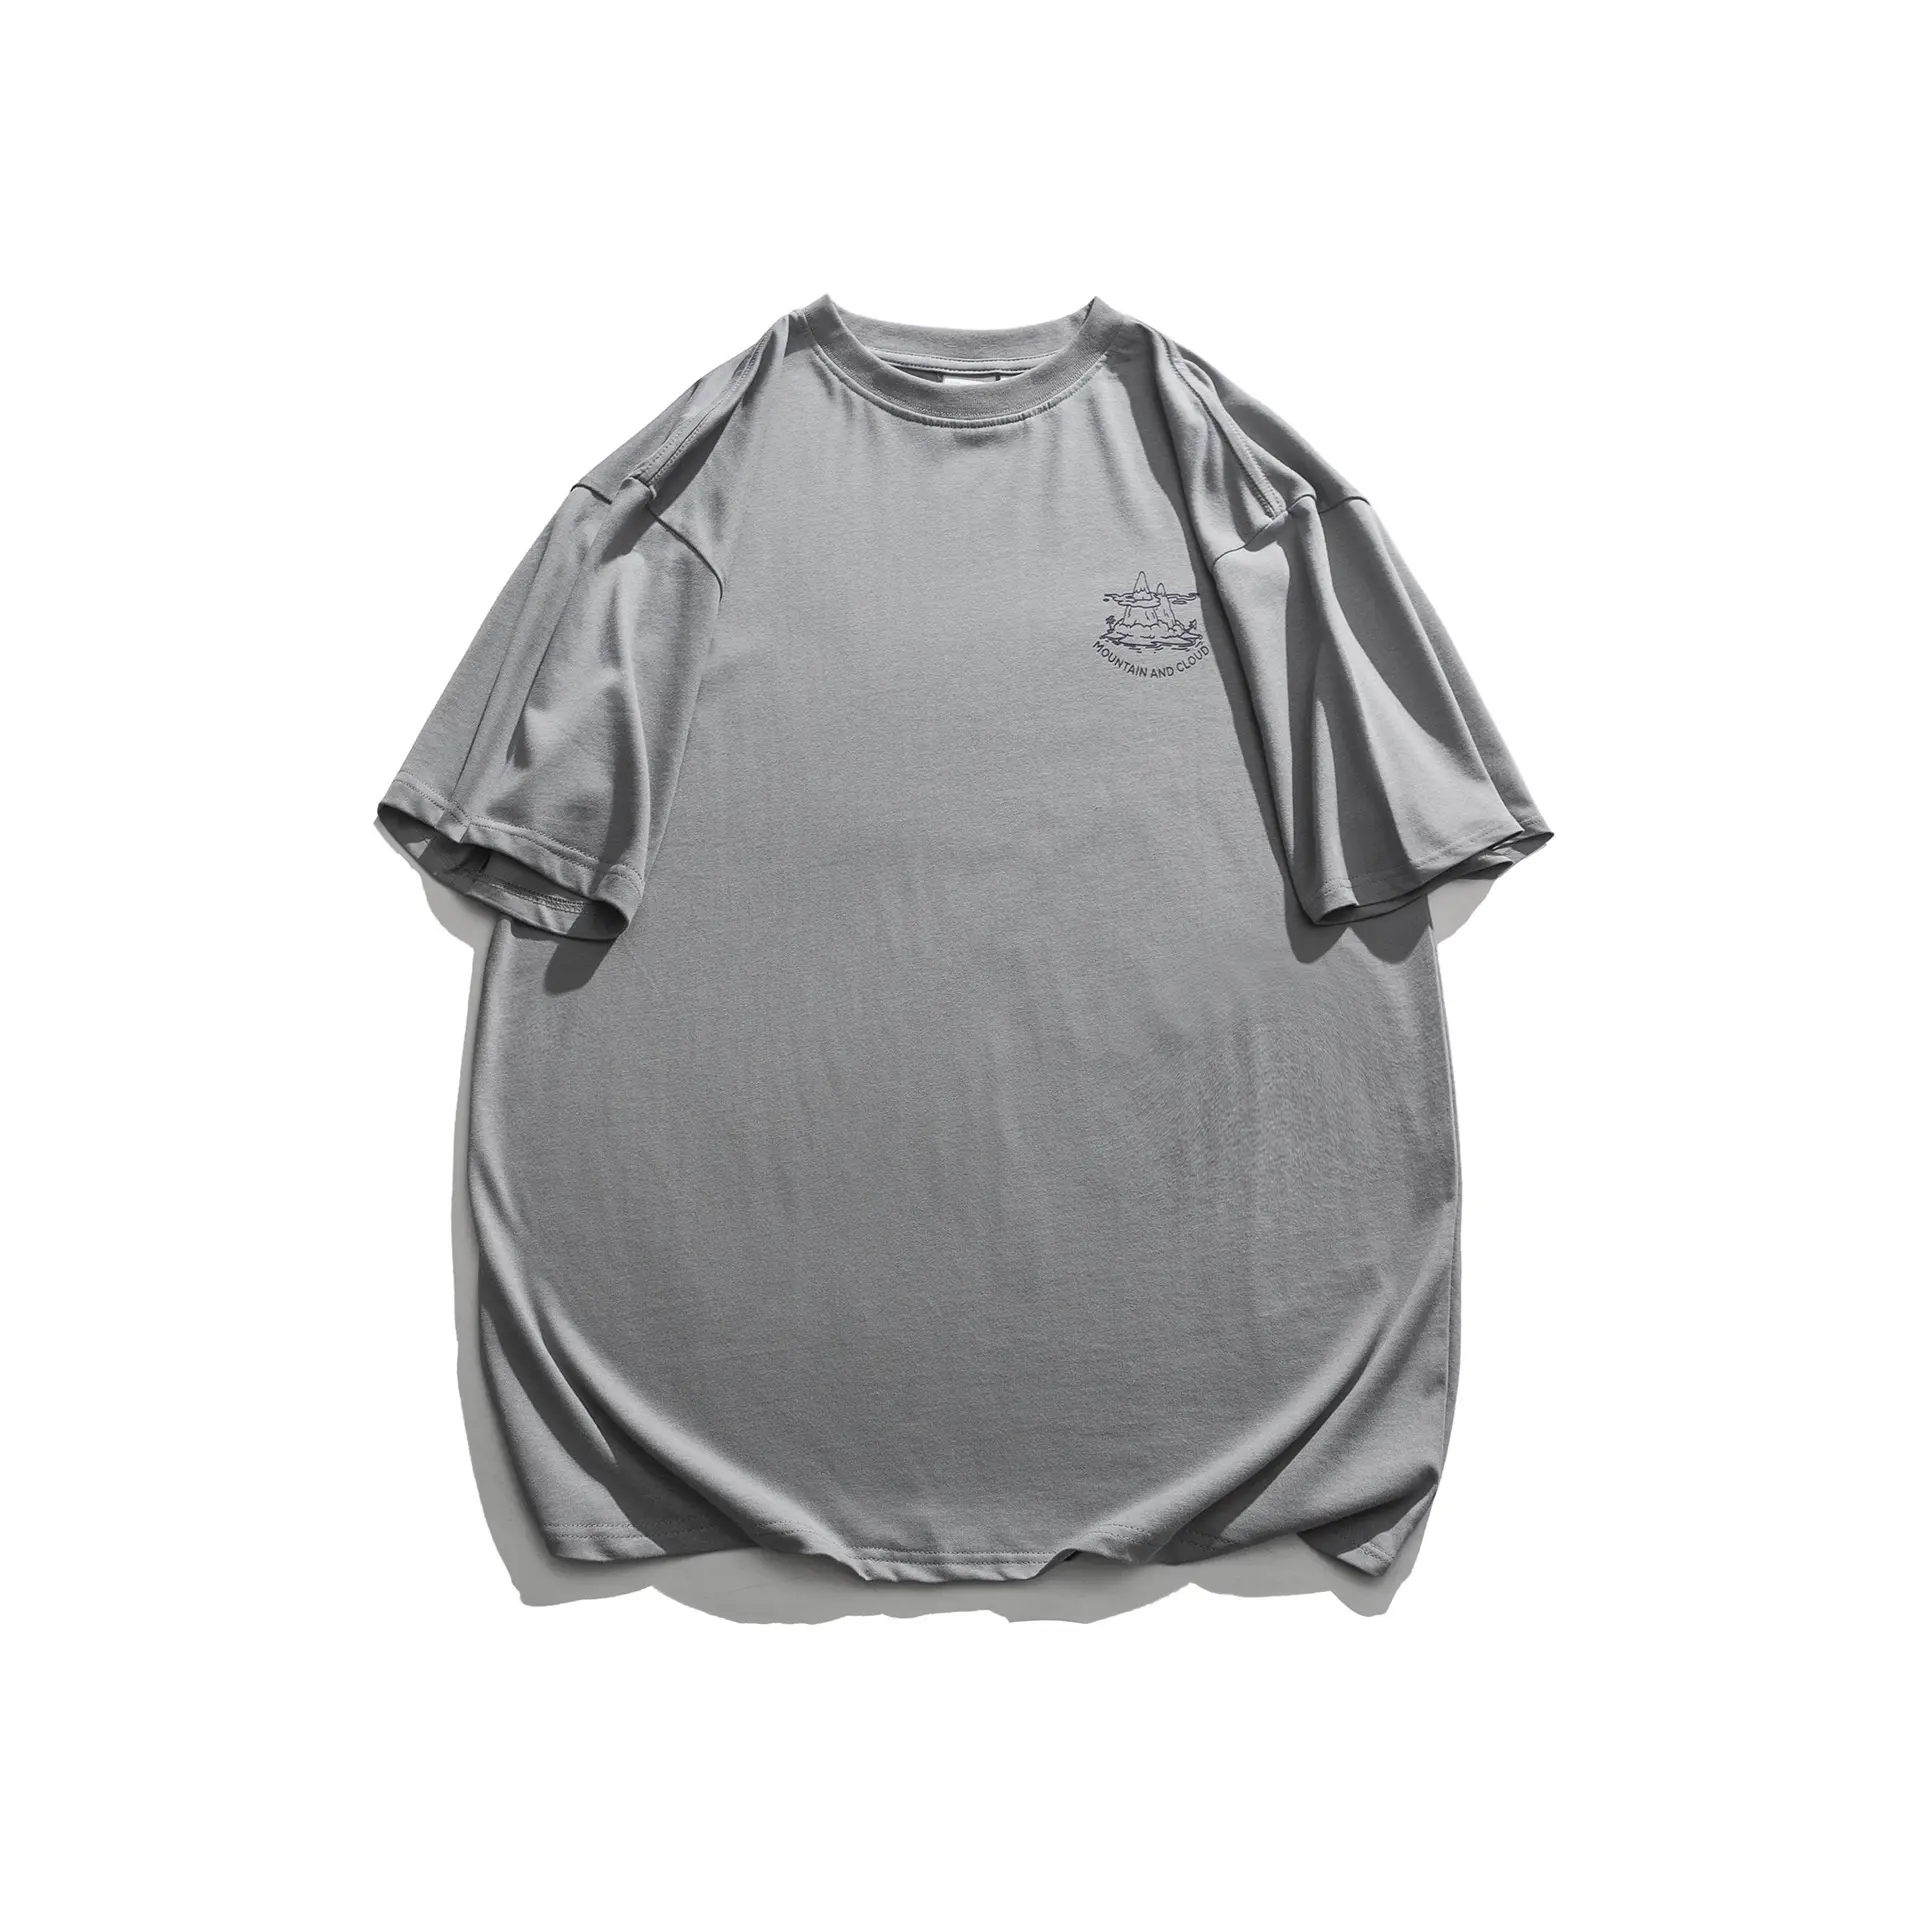 उच्च गुणवत्ता ड्रॉप कंधे कस्टम व्यक्तिगत यूनिसेक्स दर्जी वंडरलैंड 100% प्रीमियम कपास Tshirts